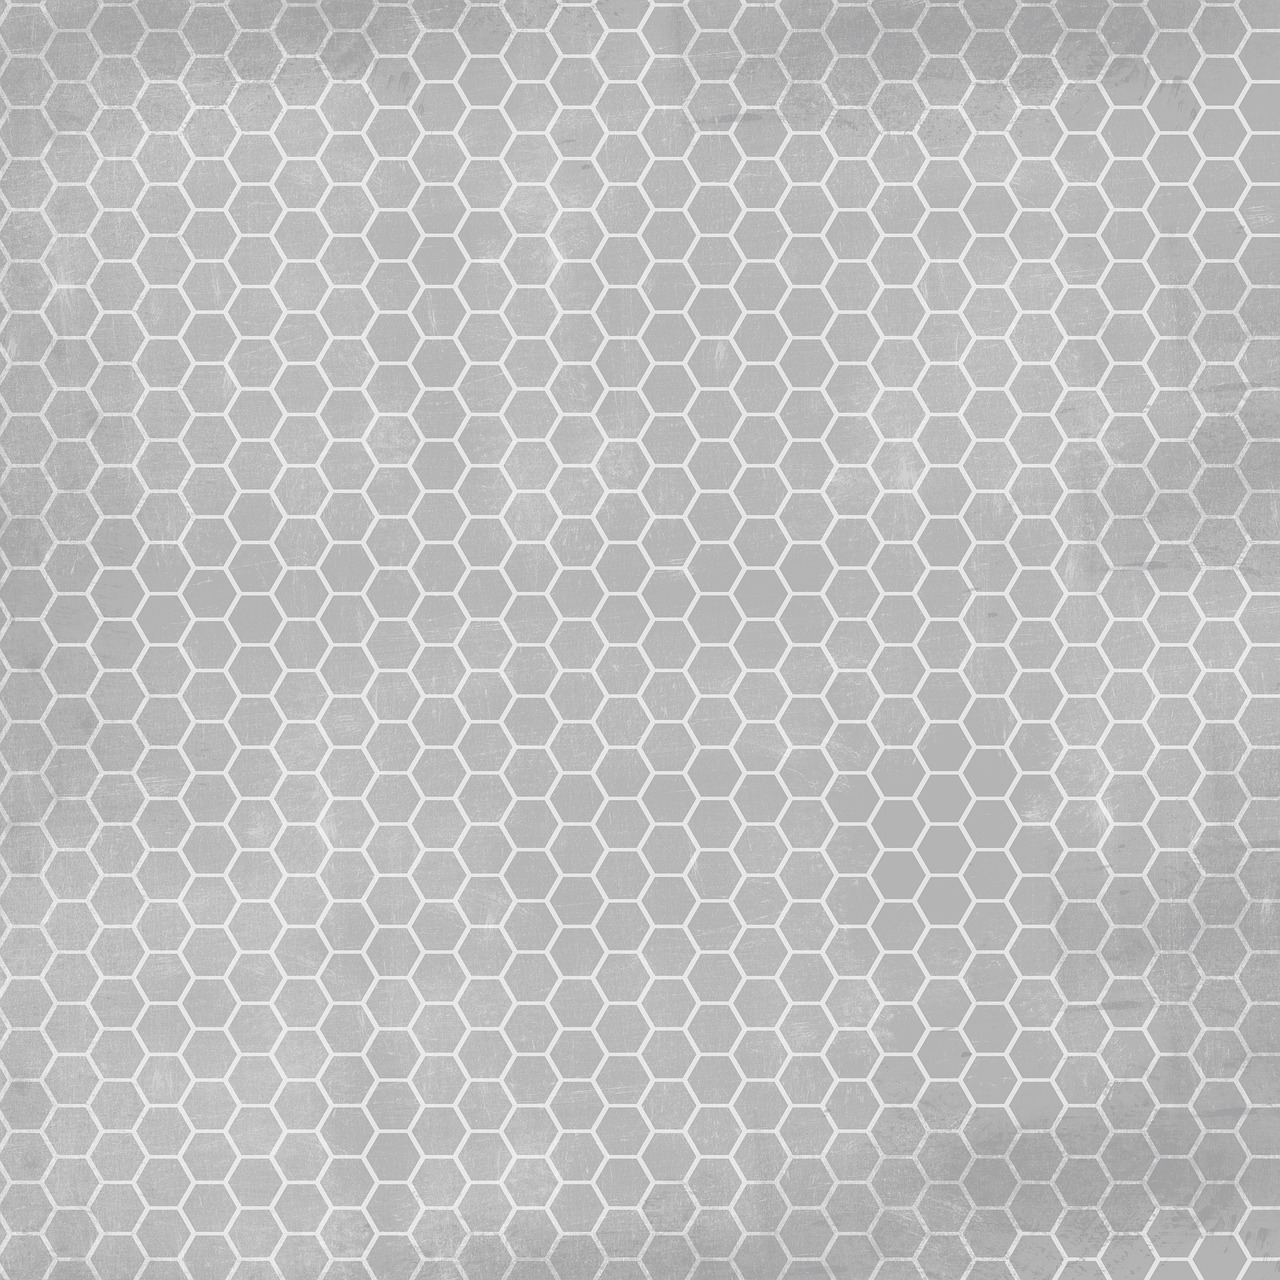 honeycomb hexagon gray free photo